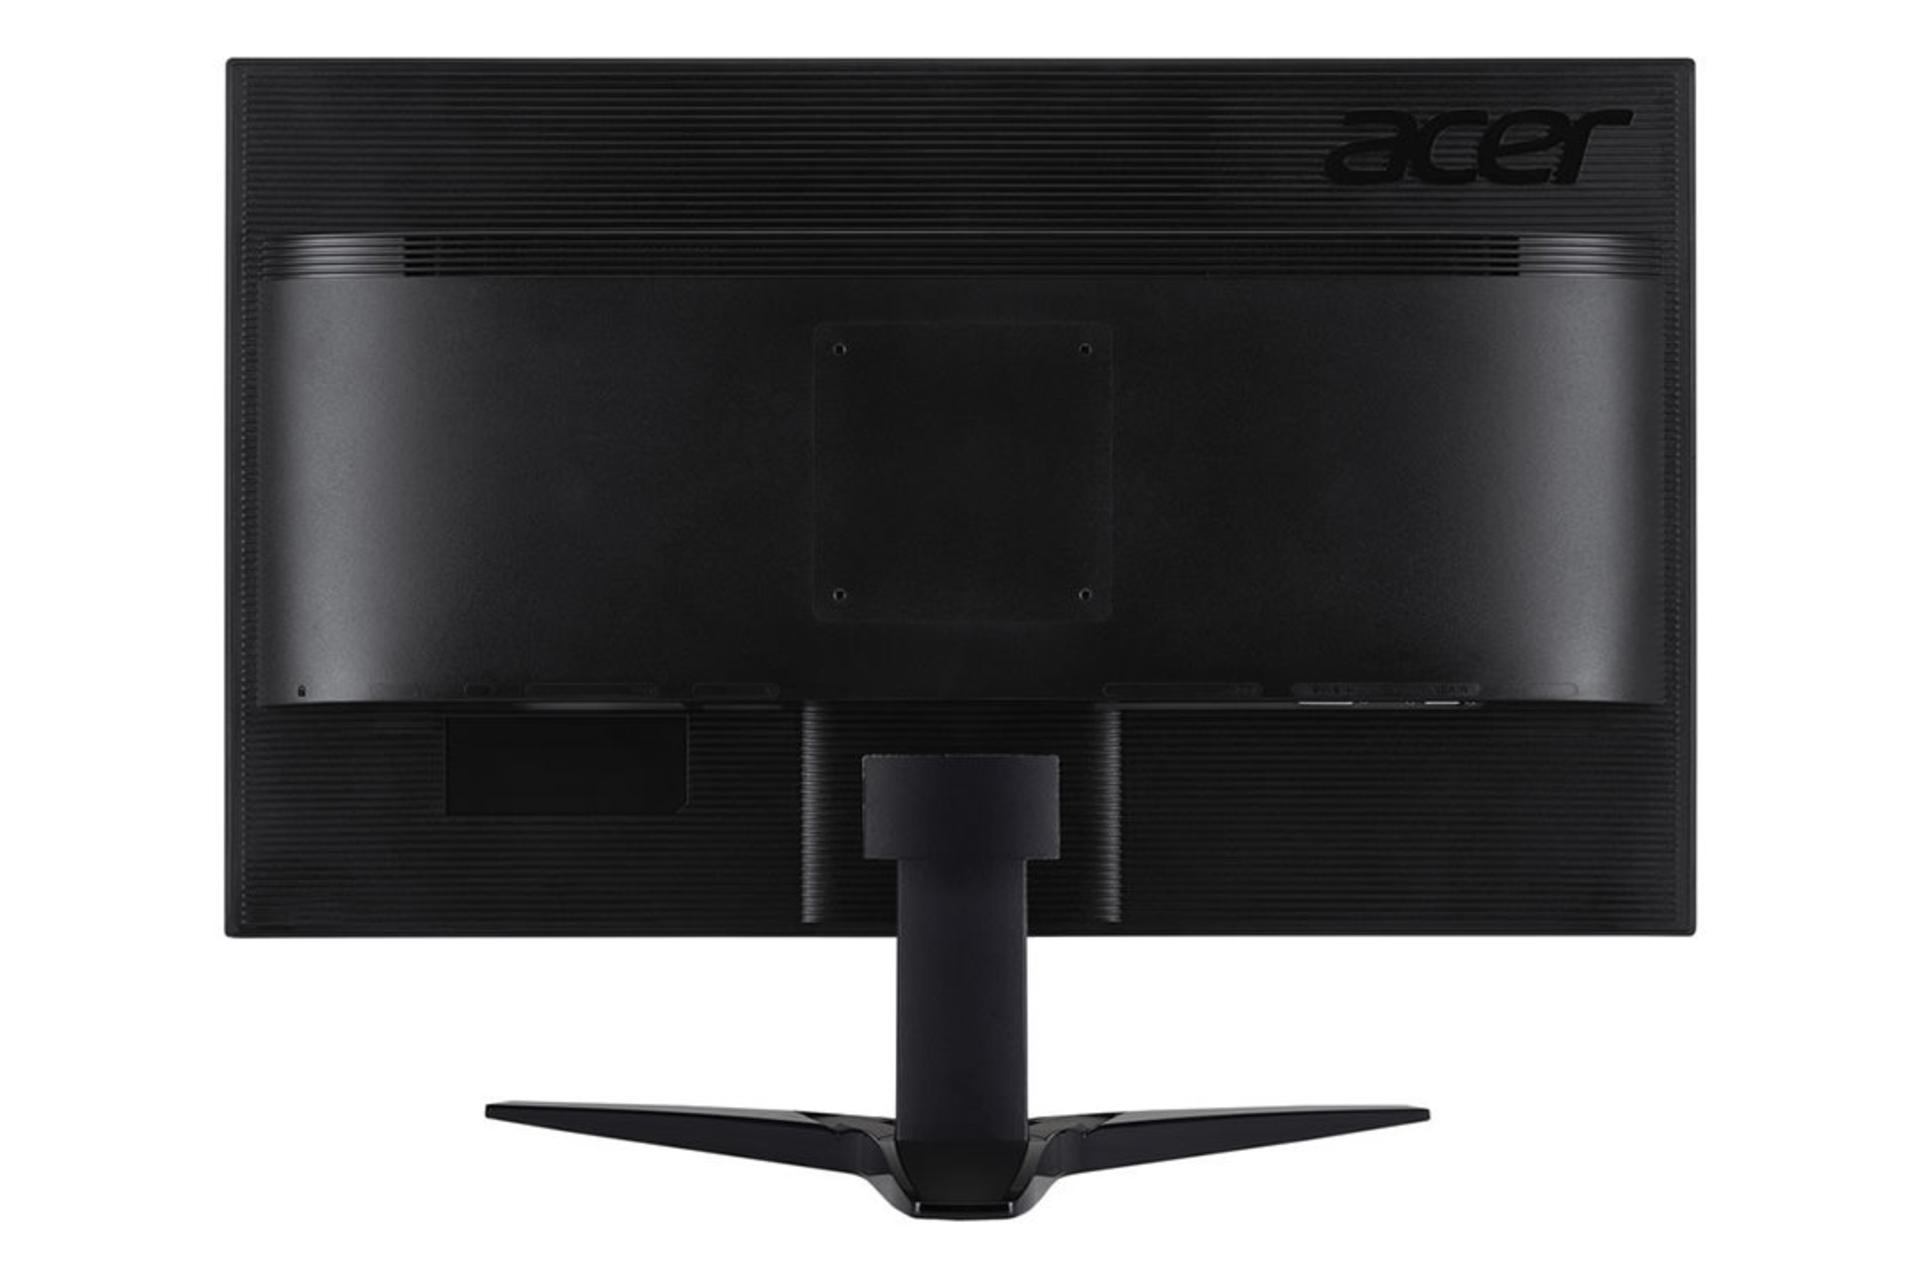 Acer KG271 FHD